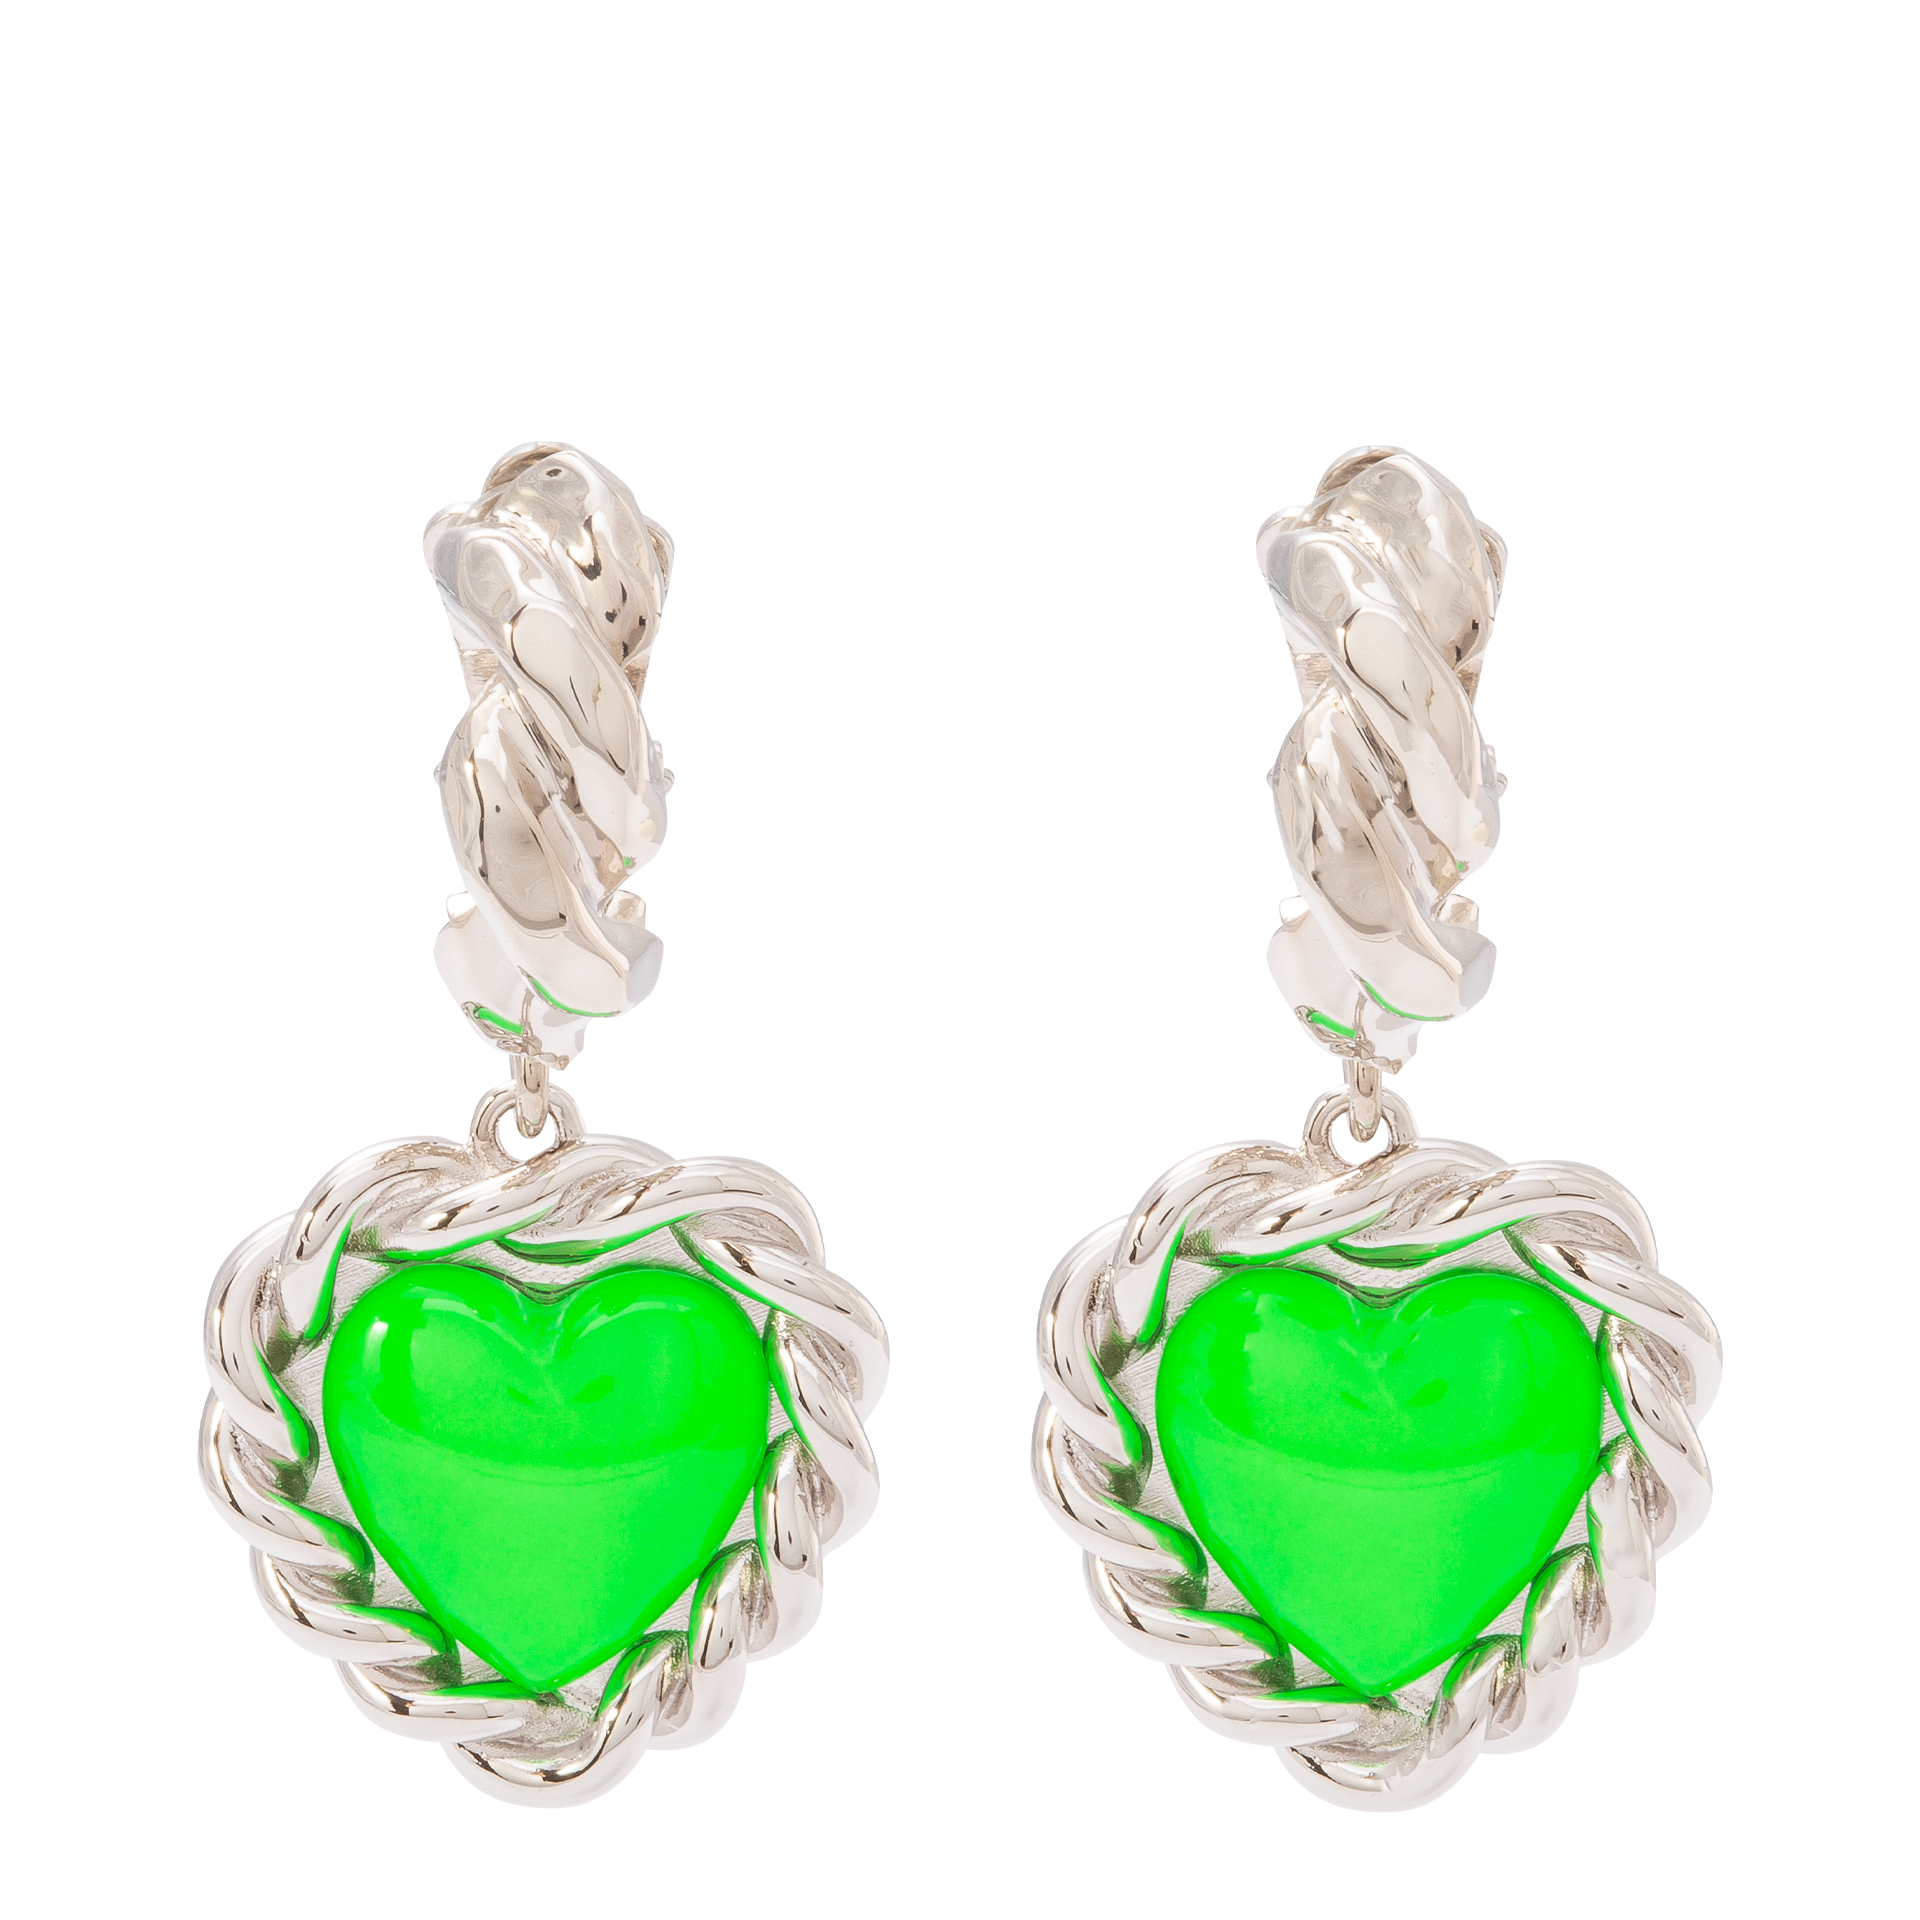 SafSafu Limelight Neon Green Earrings – L'Oeuvre